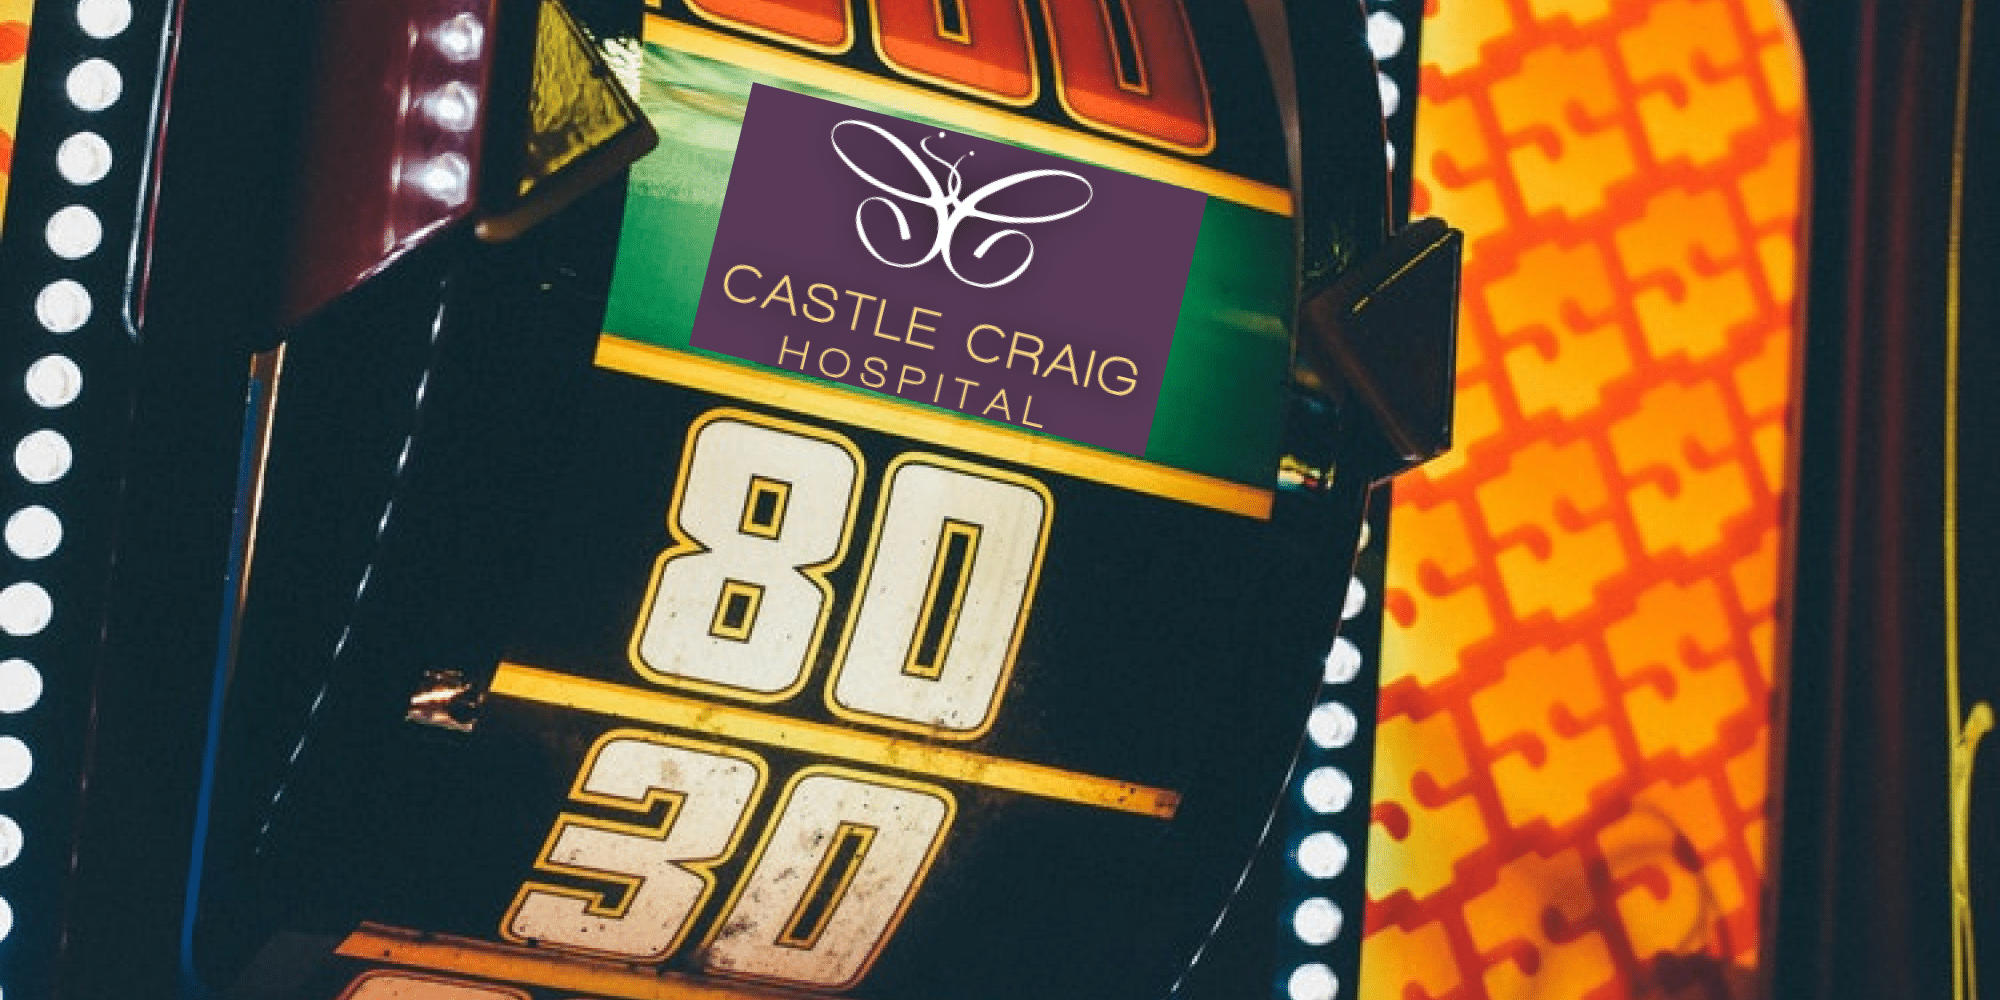 A casino machine with the Castle Craig Cryptocurrency Rehab Program logo.